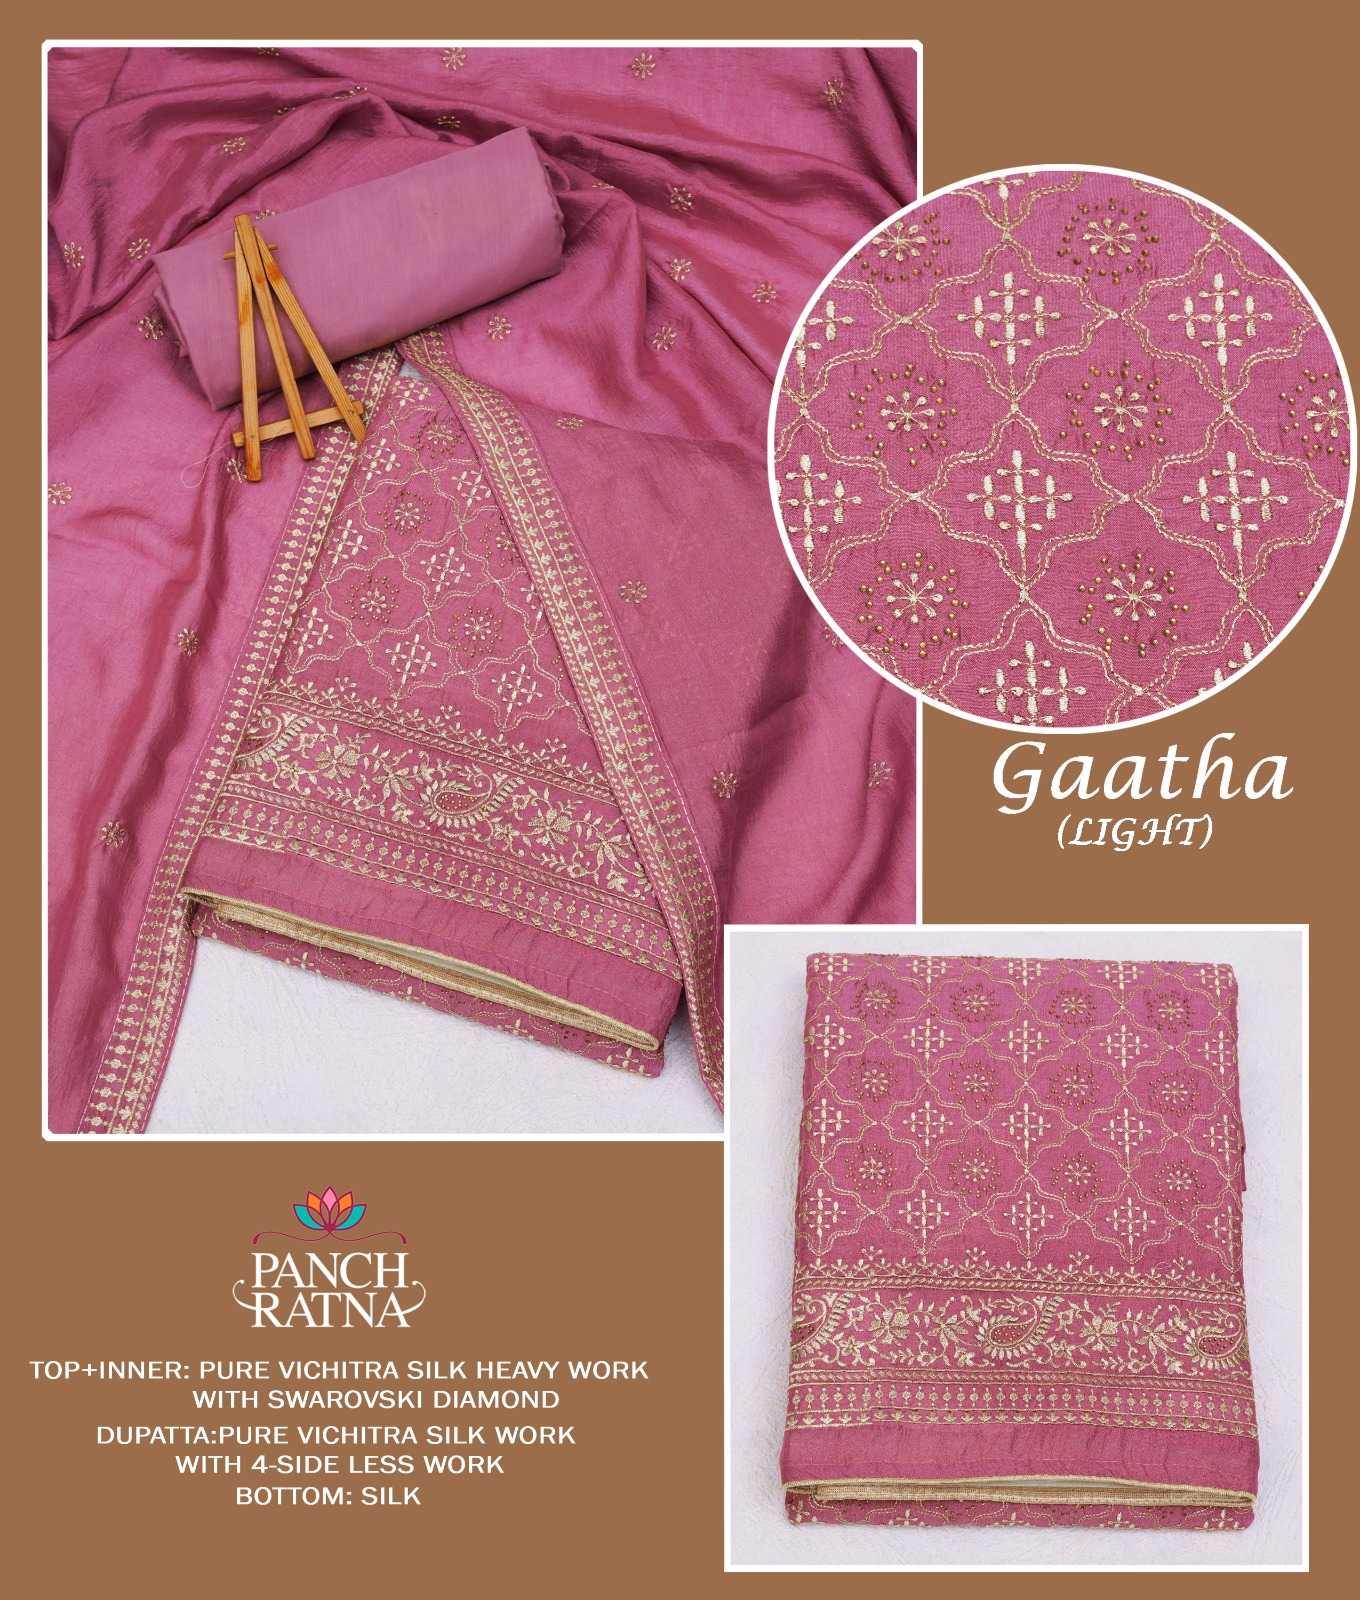 panch ratna gaatha light beautiful traditional vichitra silk work unstitch ladies suit